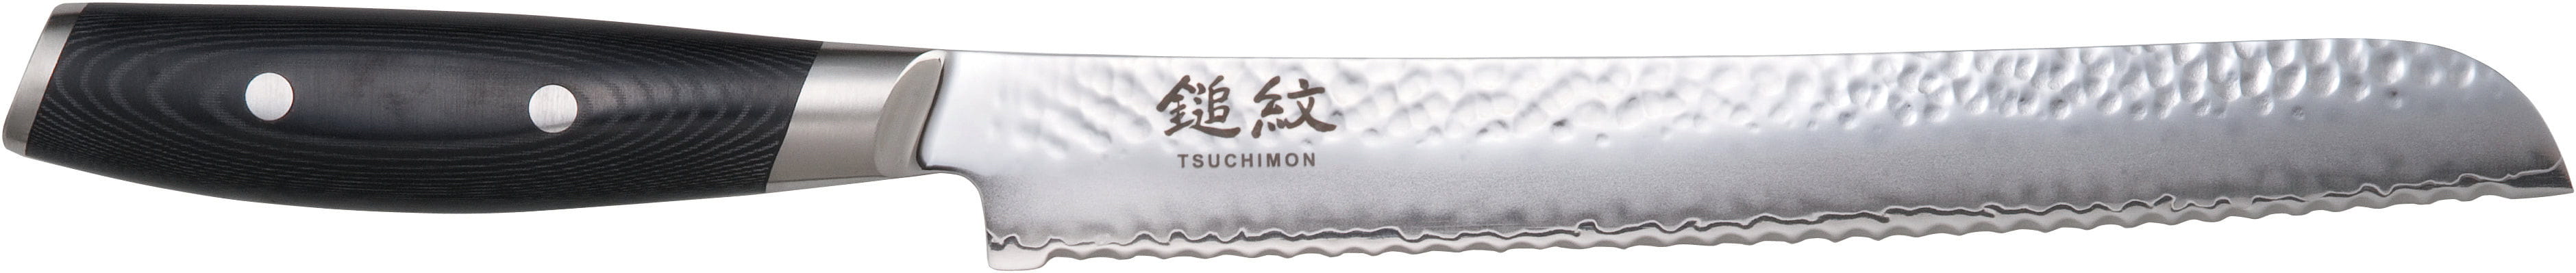 Coltello da pane yaxell tsuchimon, 23 cm